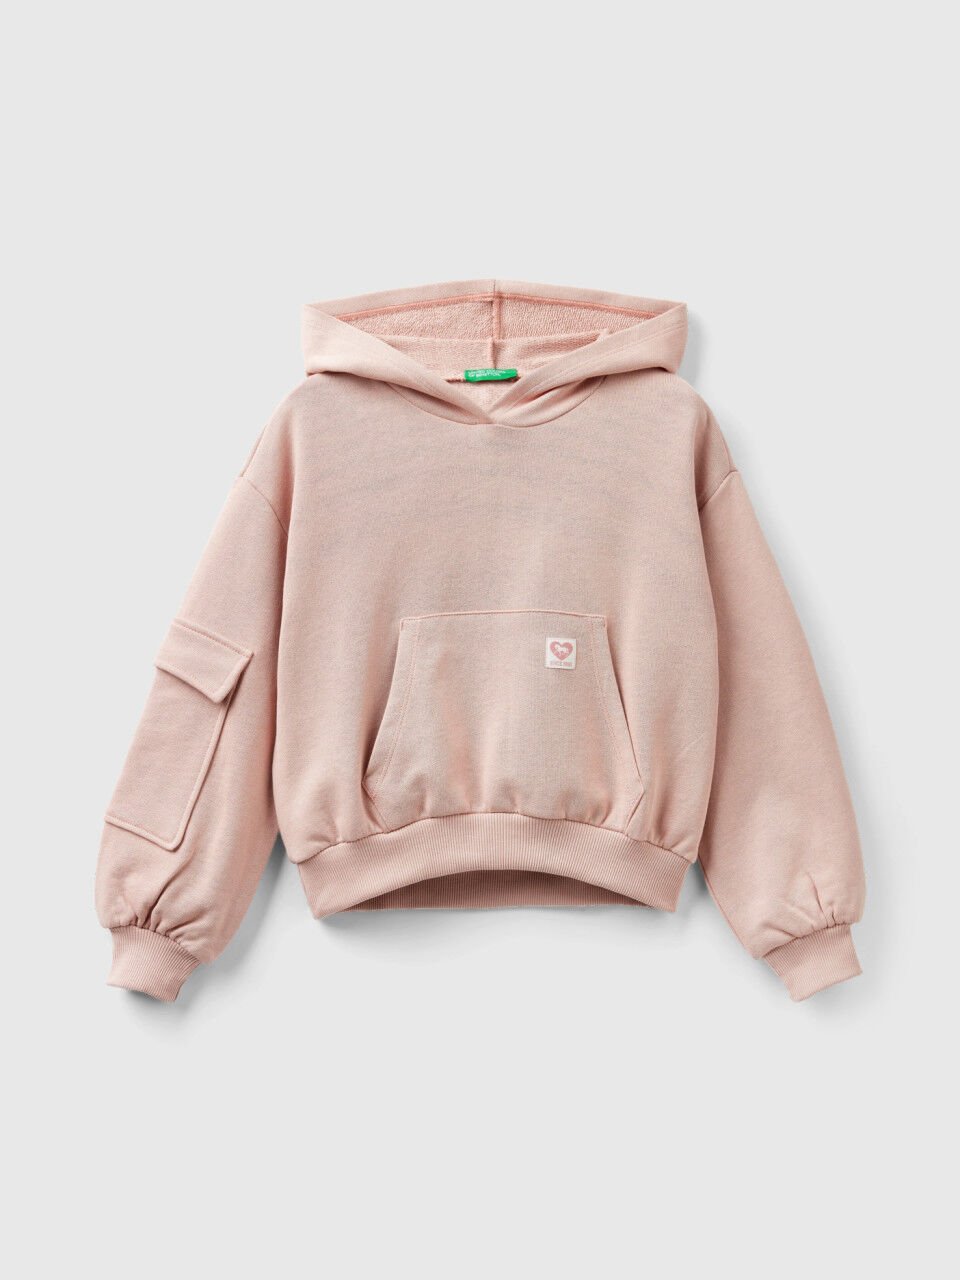 Buy MONTE CARLO Magenta Printed Blended Fabric Hooded Girls Sweatshirt |  Shoppers Stop